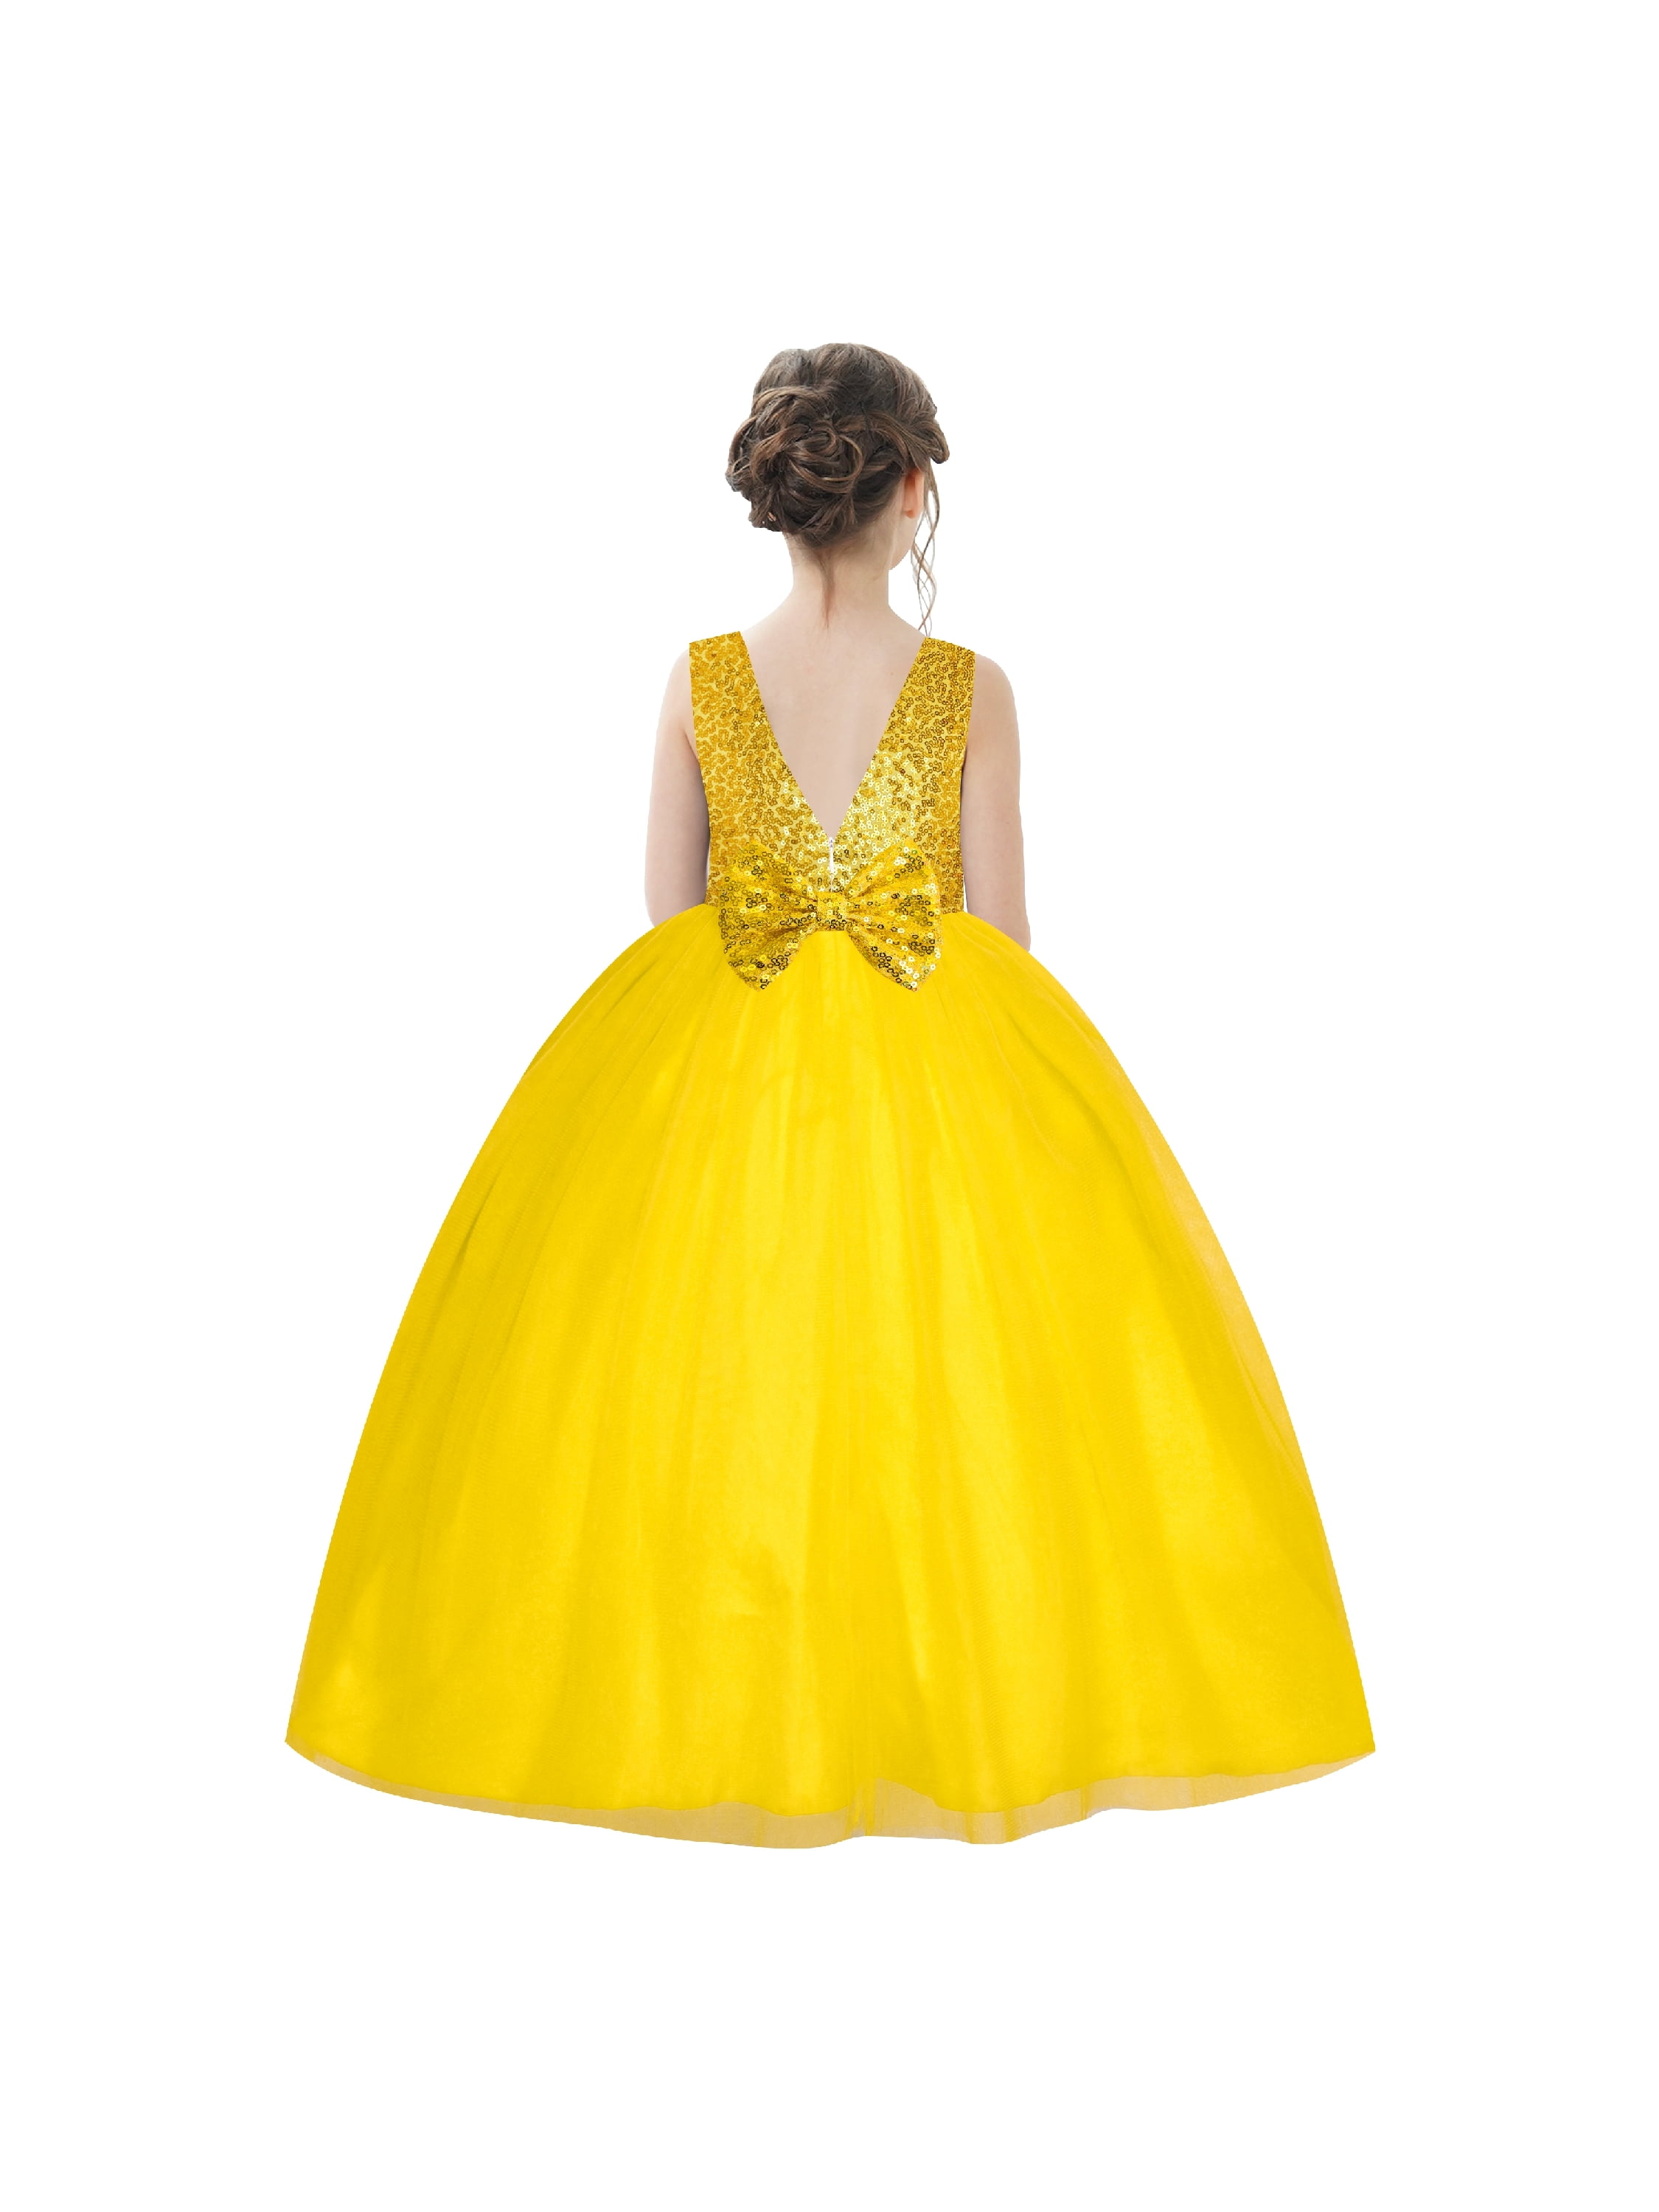 Sunny Fashion Flower Girl Dress Sleeveless Golden Ball Gown Wedding Pageant 8 Years Walmart Com Walmart Com